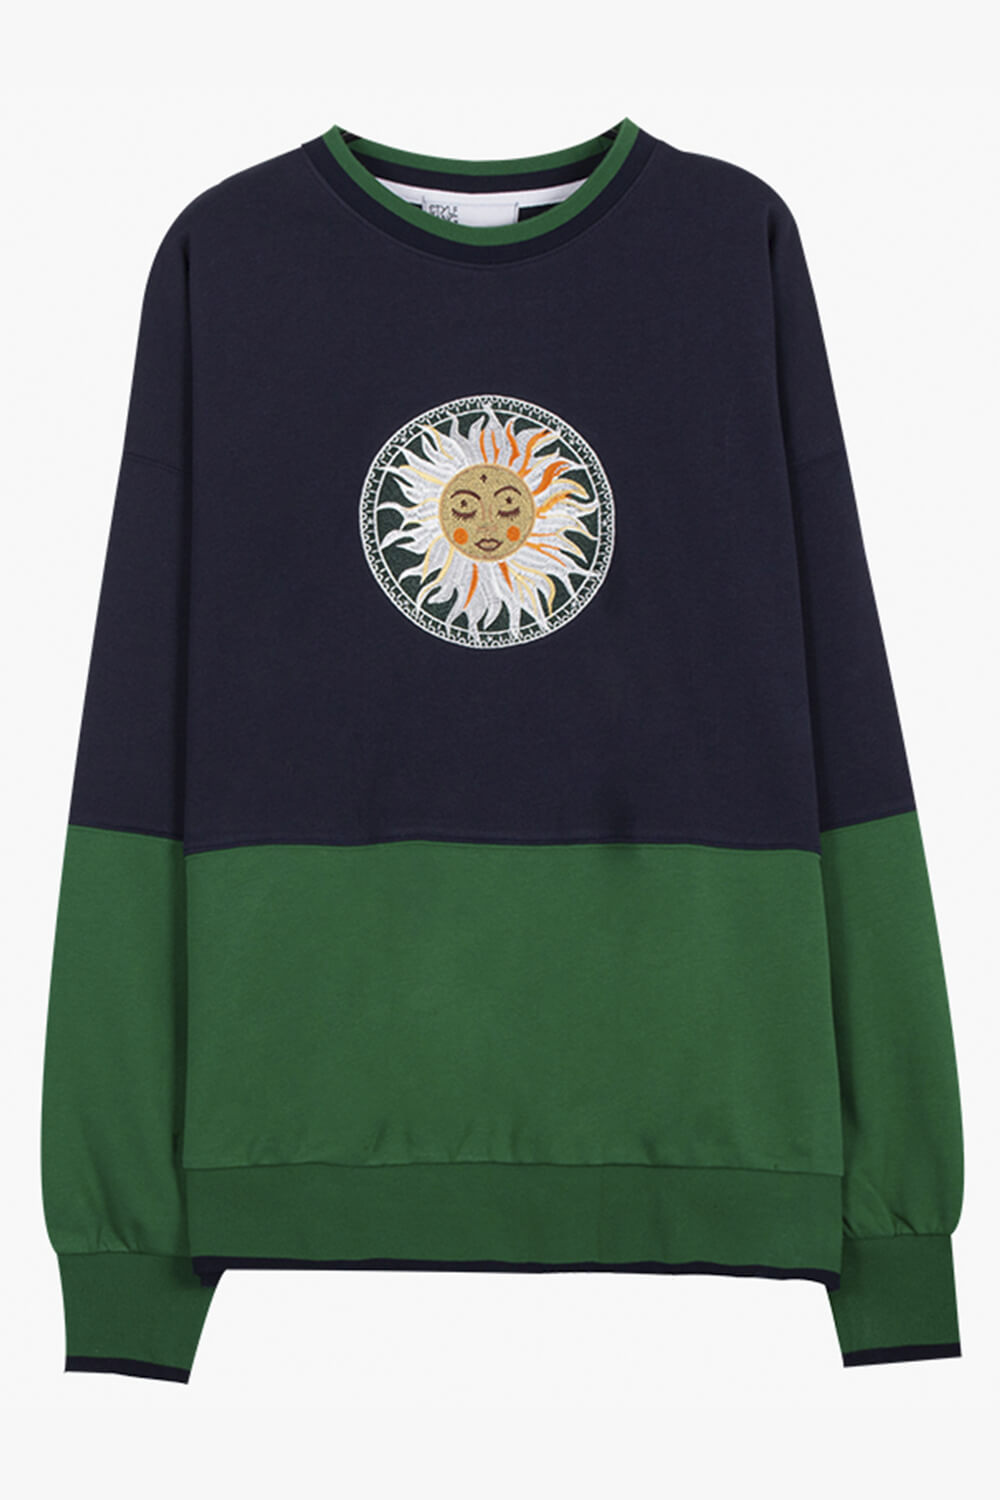 Sun Goddess Embroidery Sweatshirt